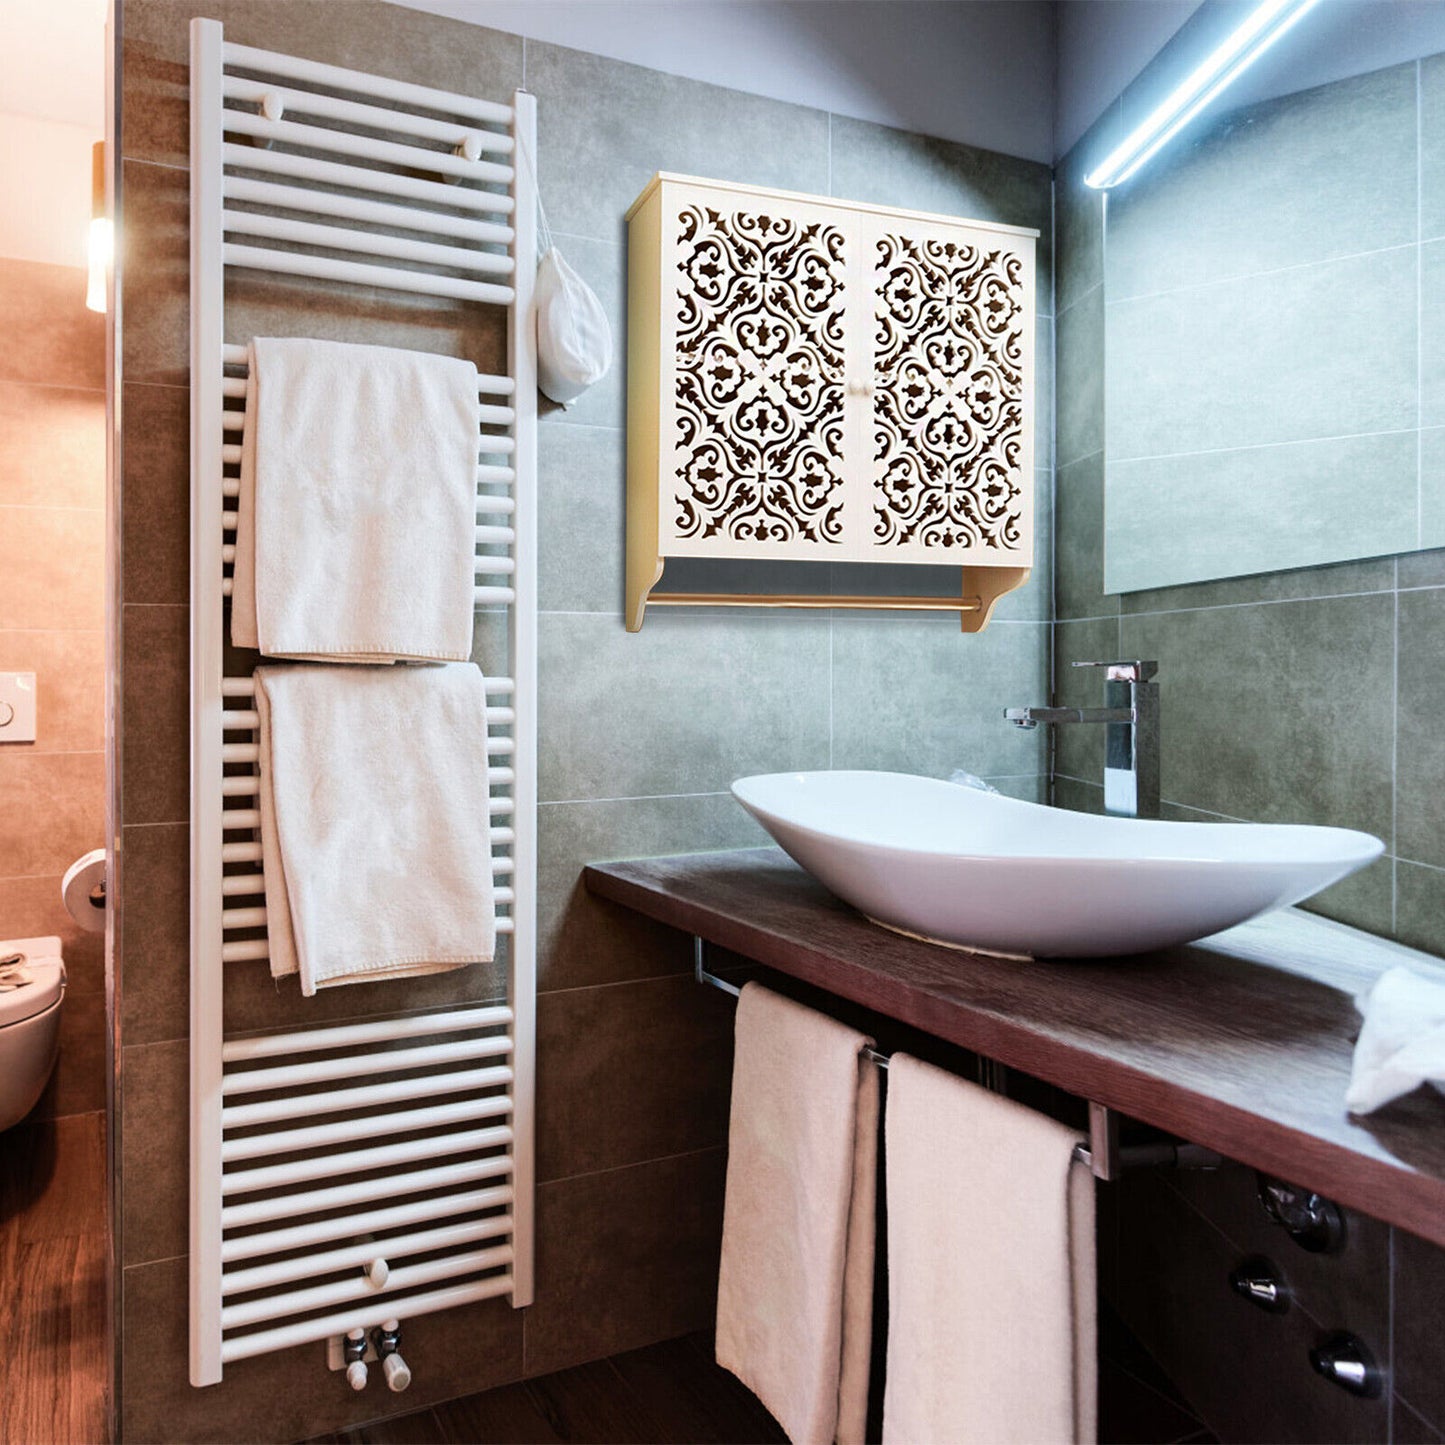 Bathroom Wall Mounted Cabinet With Towel Rod , خزانة الحمام المثبتة على الحائط مع قضيب المناشف